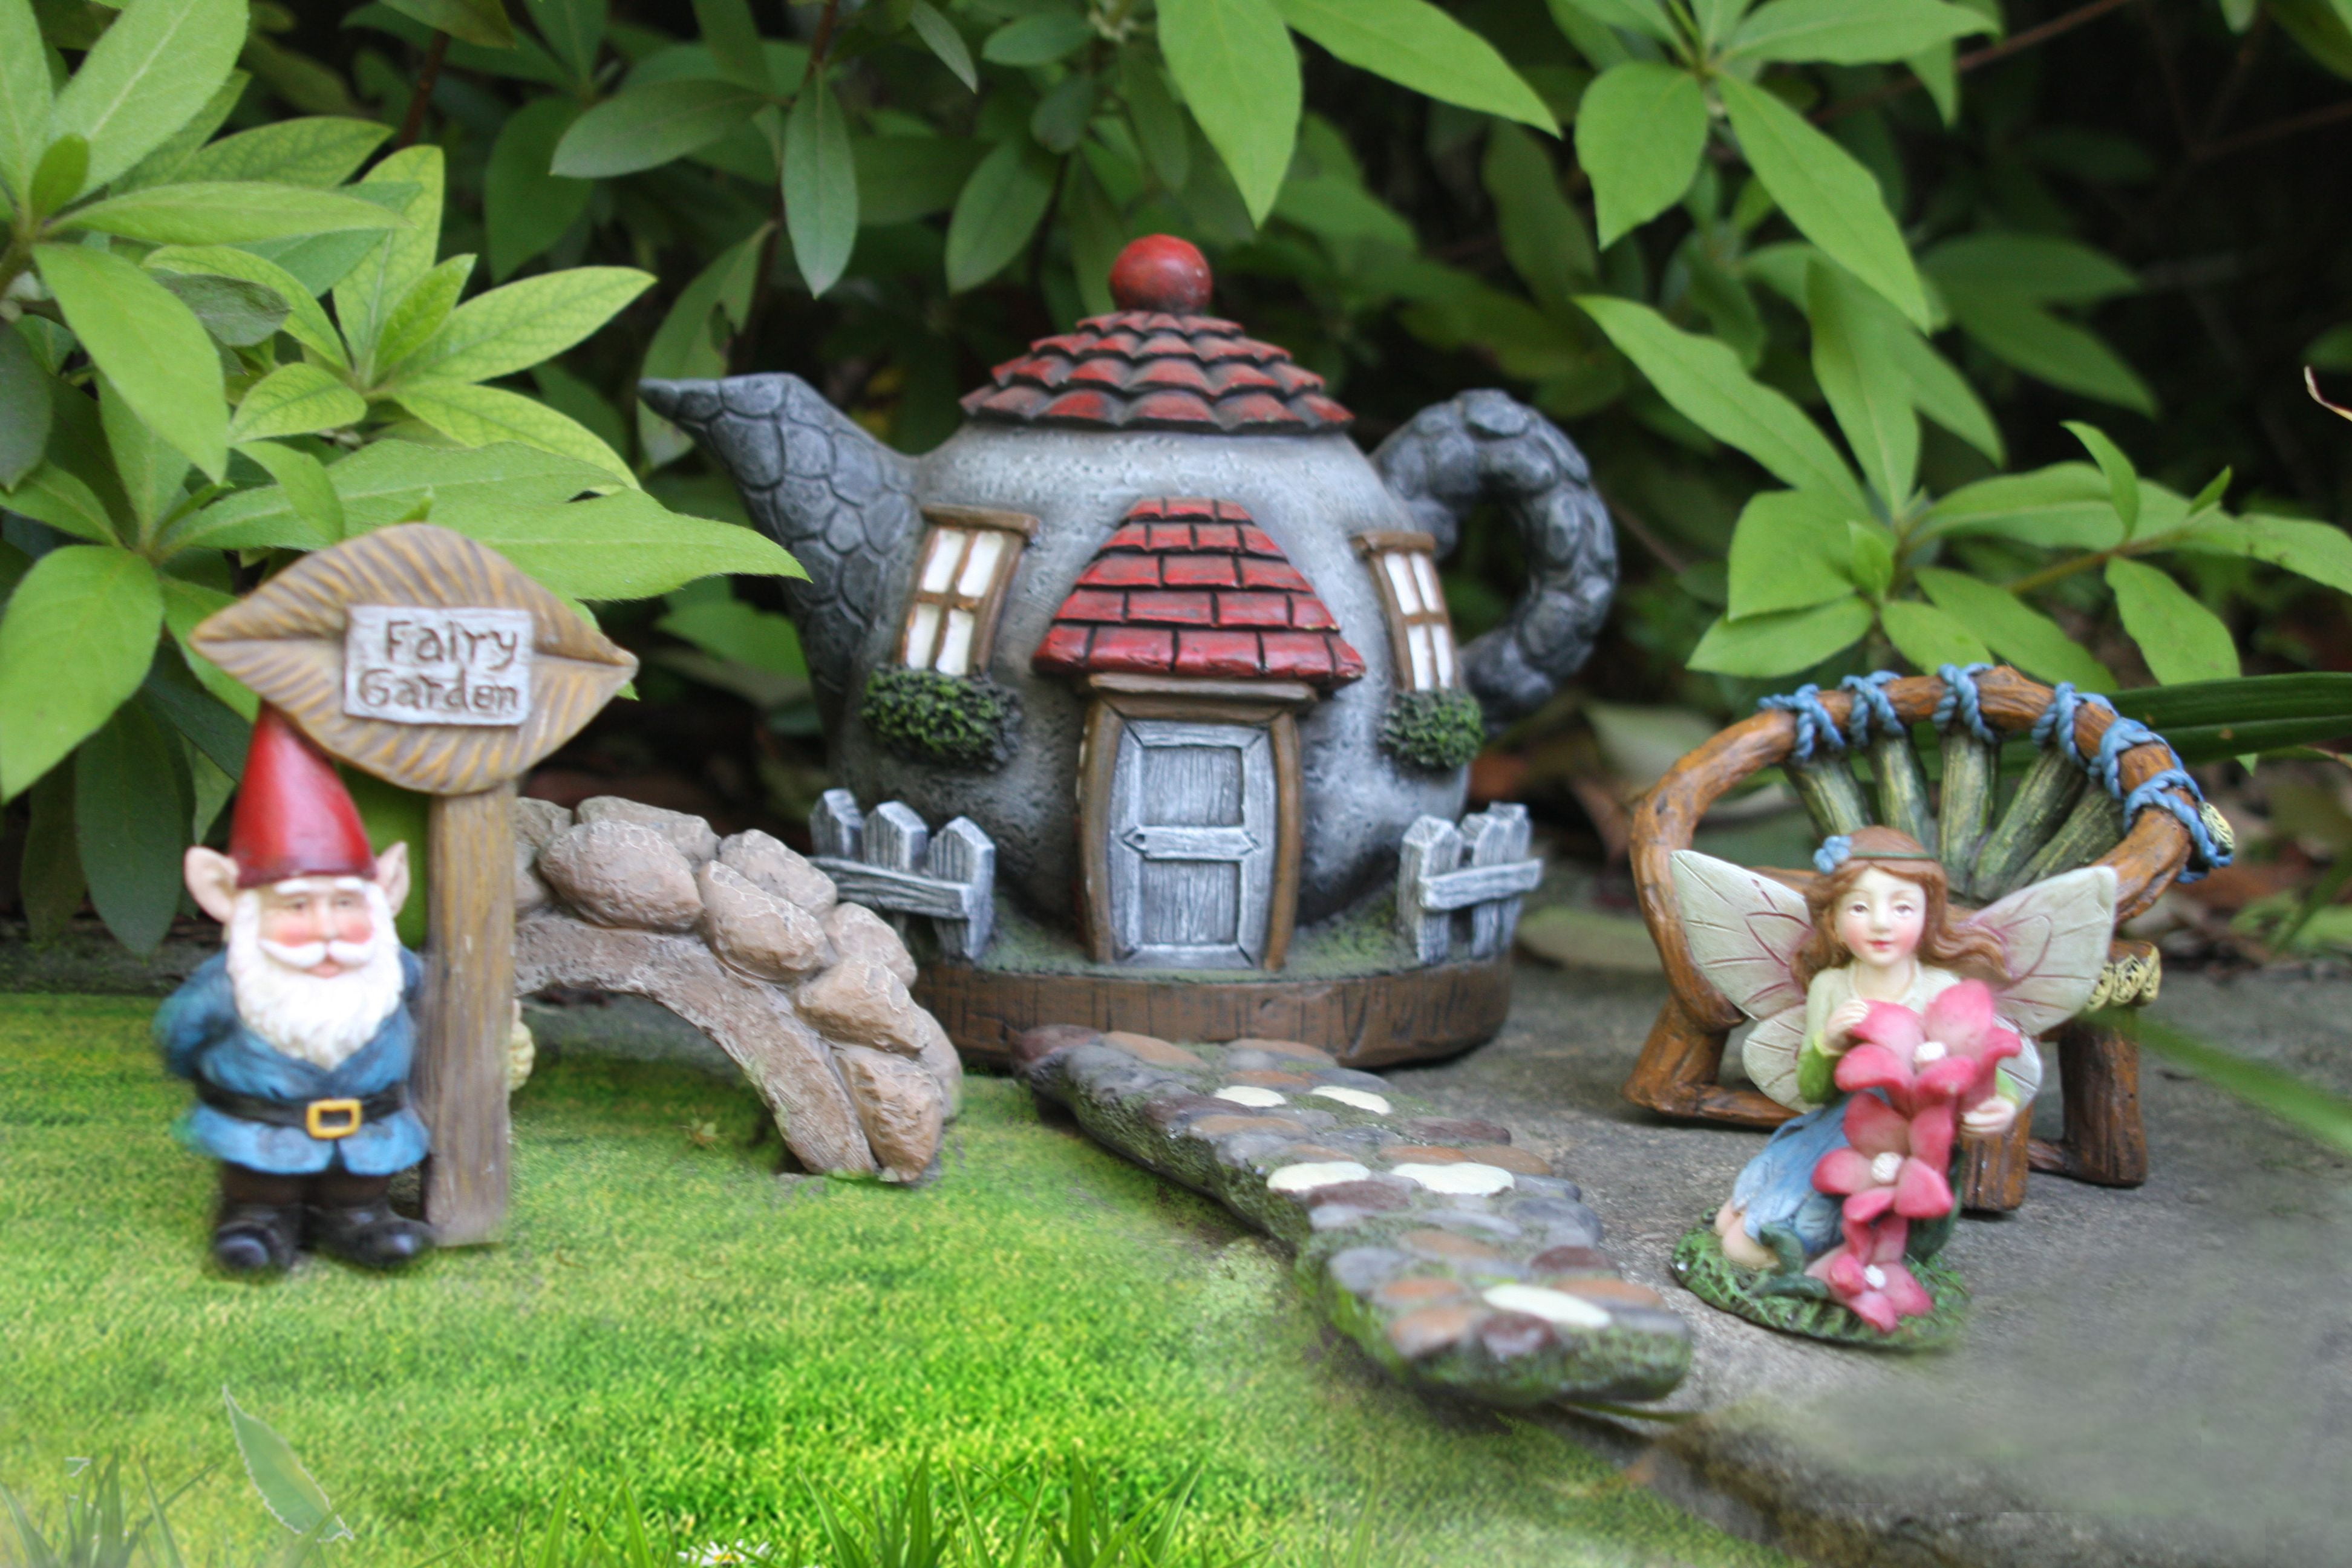 Miniature garden gnomes fairy door garden accessory 1:12 scale 